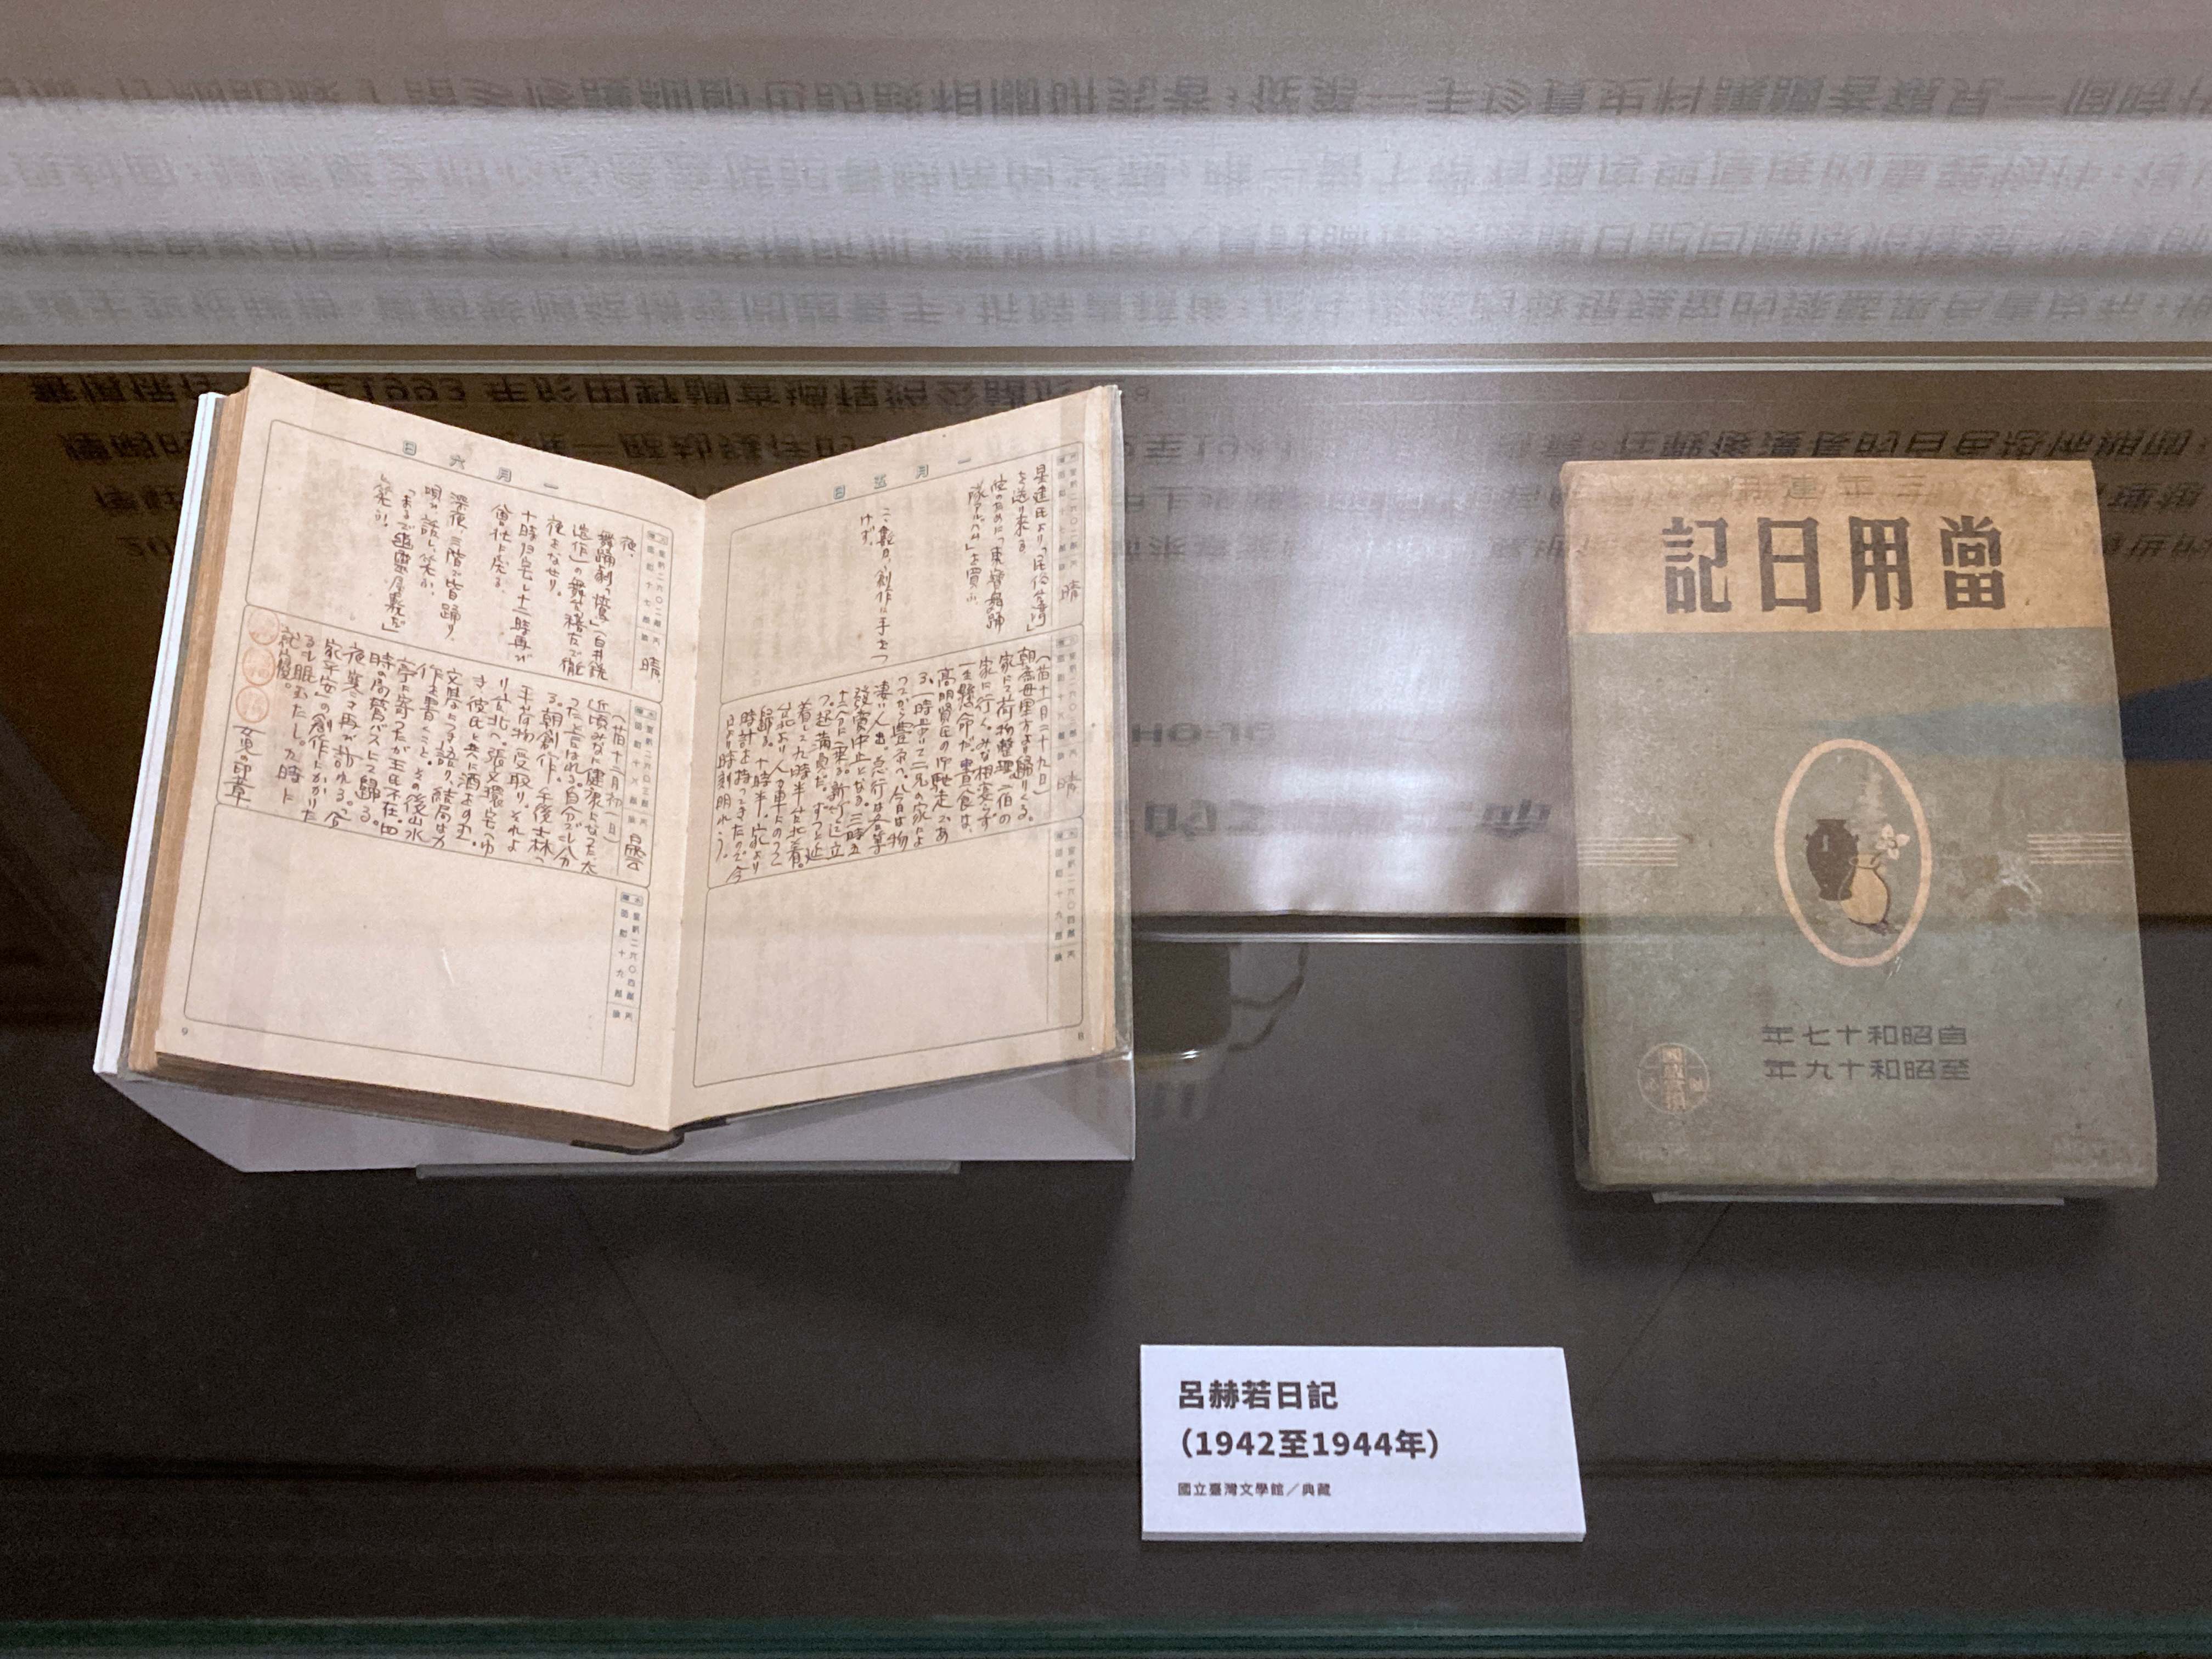 NMTL’s 20th-anniversary exhibition highlights restored diary of Lu Ho-jo